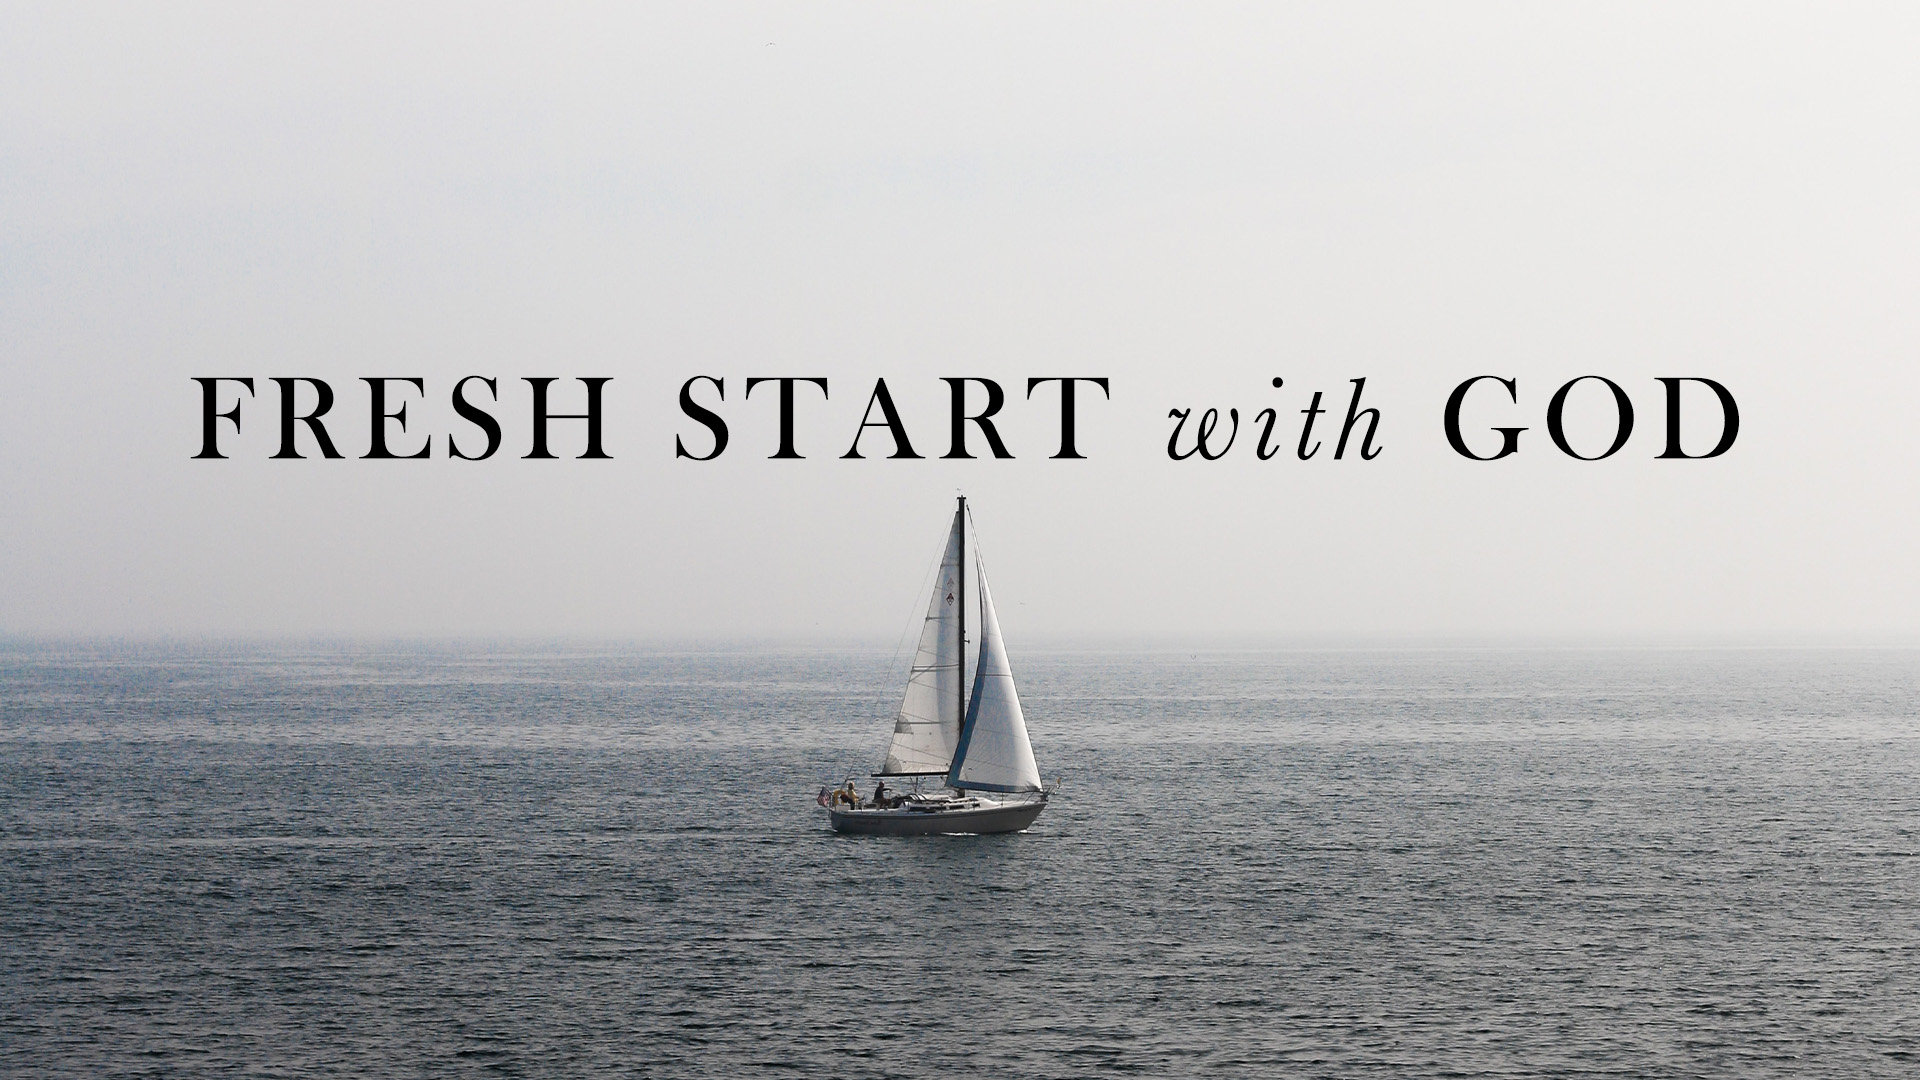 Fresh Start with God

Sunday | 9:00am
July 24th
